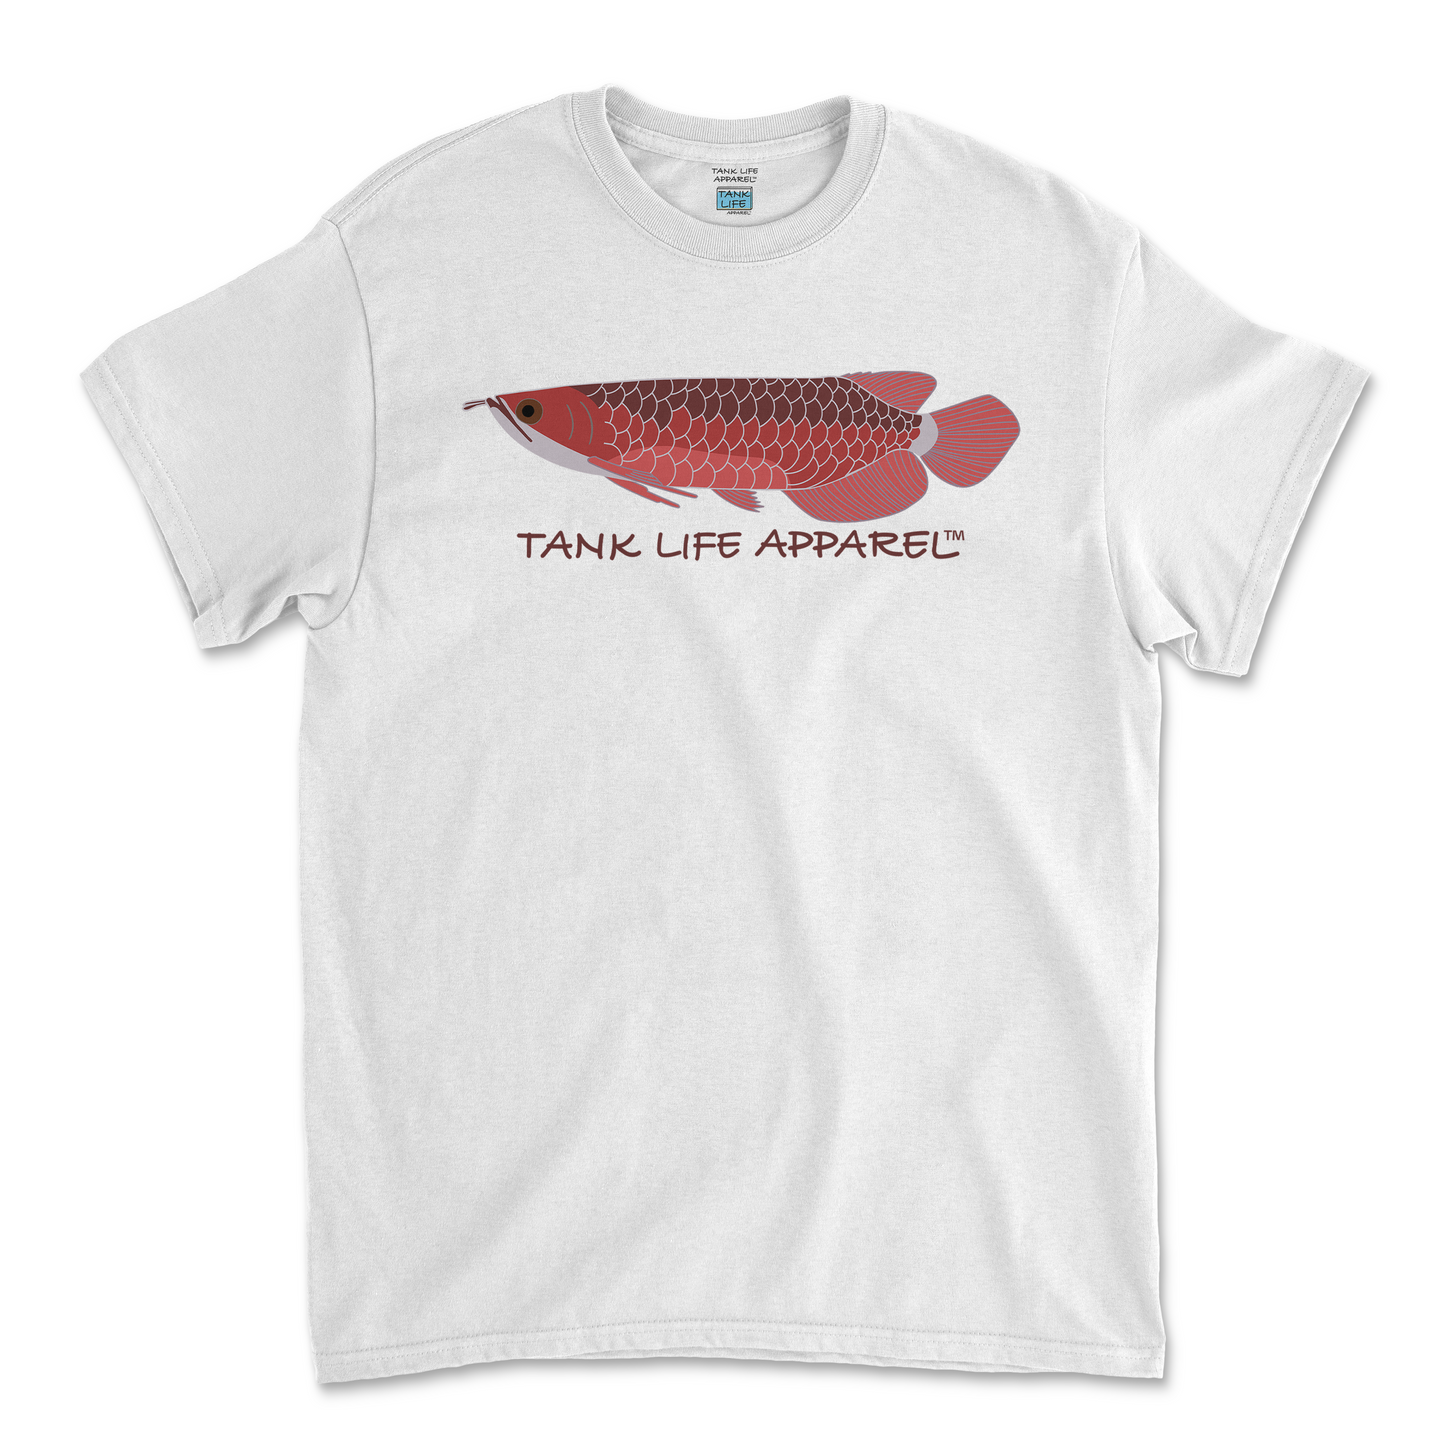 Tank Life Apparel red asian arowana design on a youth tee